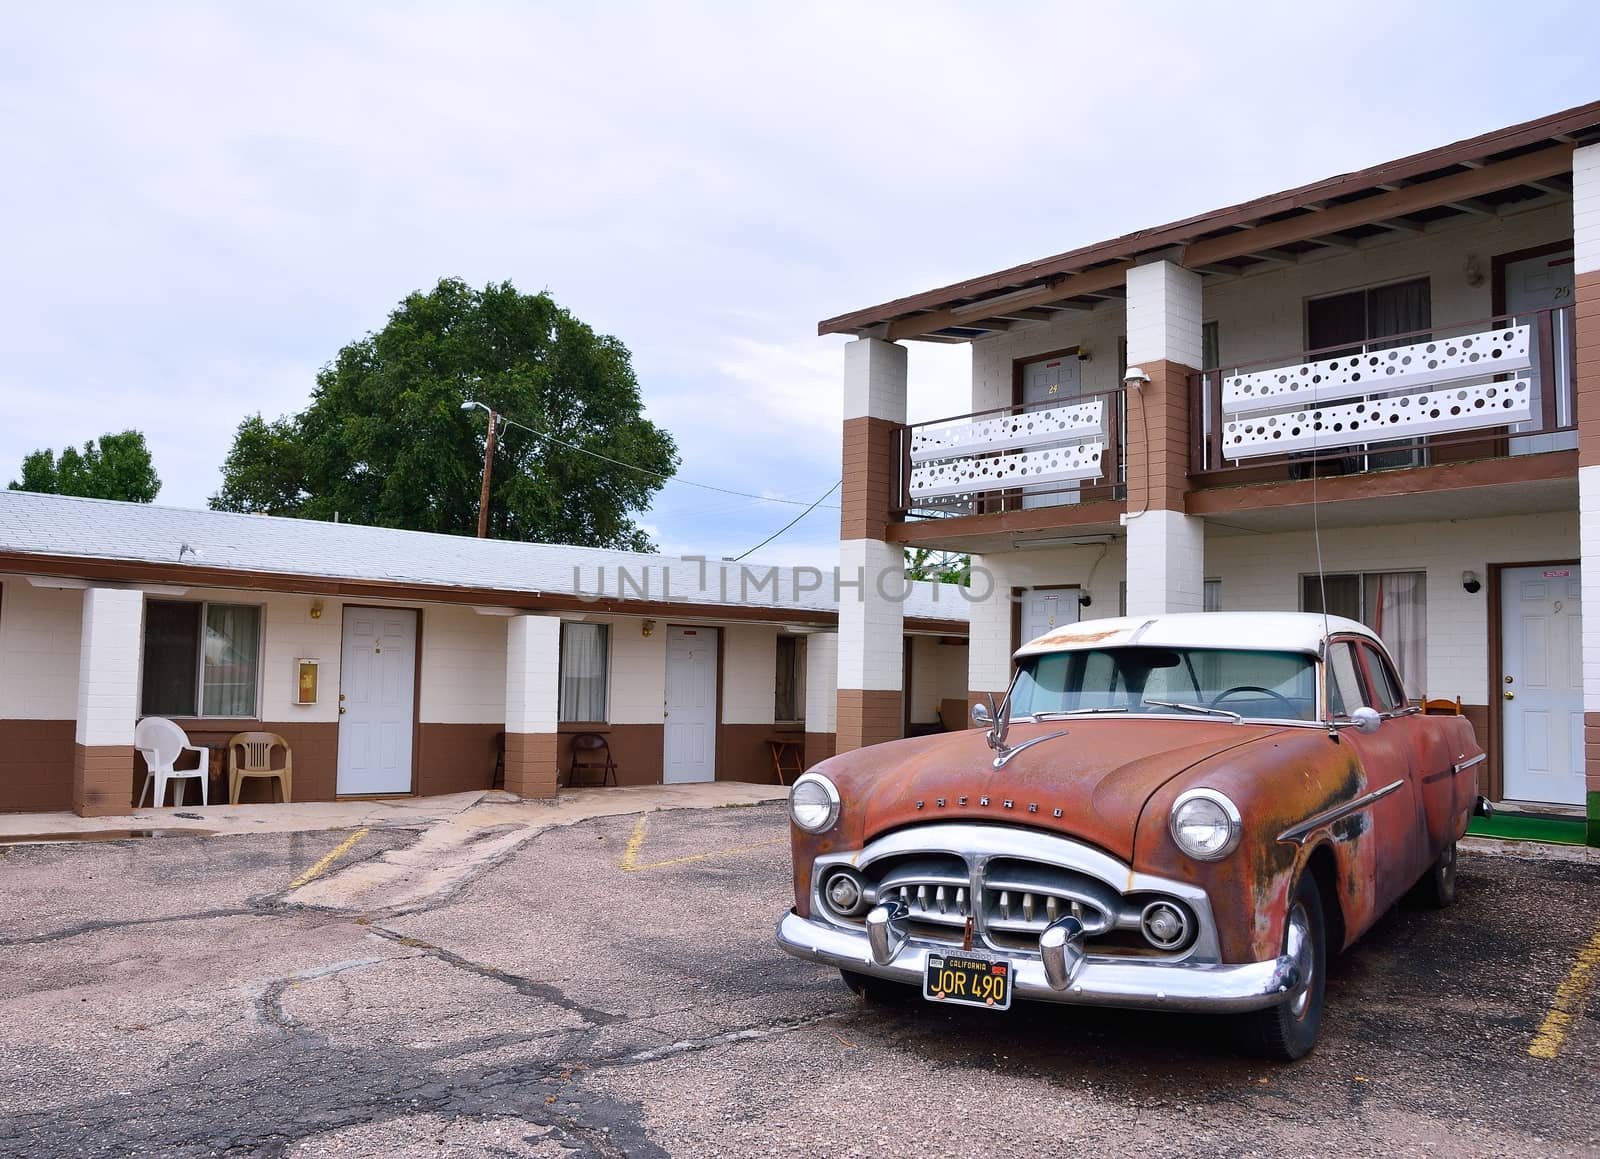 Seligman, Arizona, Usa Ð July 24, 2017: Rusty abandoned Packard car in Seligman, Arizona.